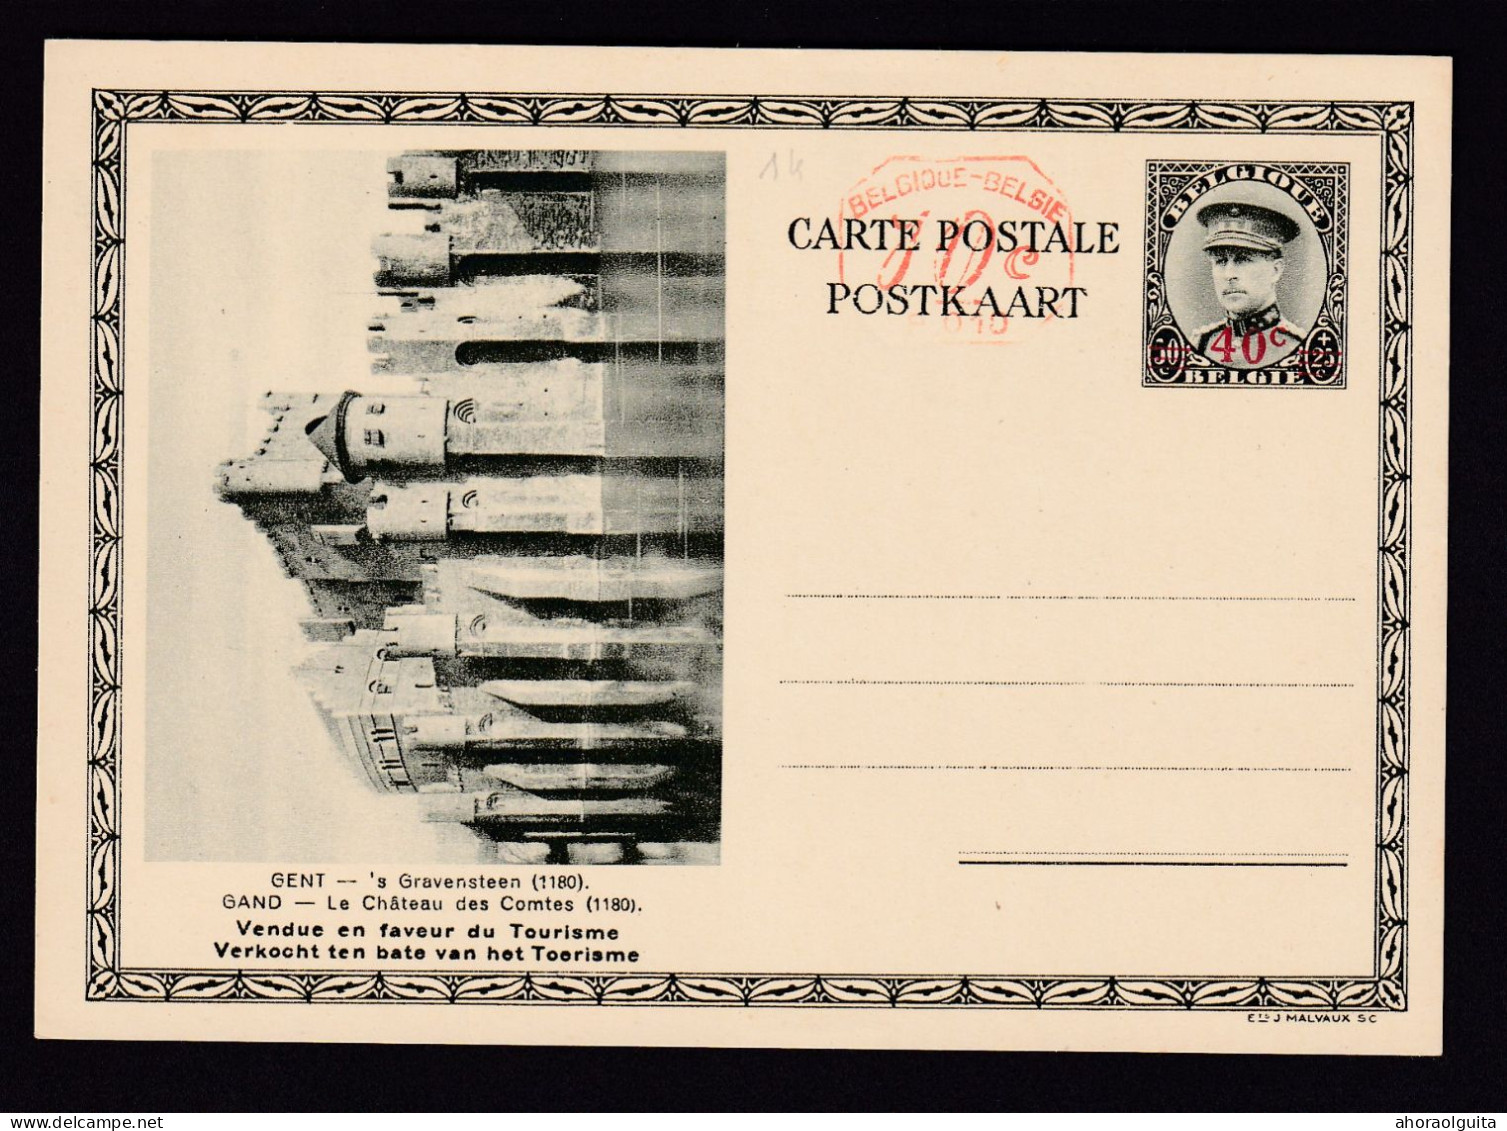 DDBB 896A -- Entier Illustré Képi No 27 M1 - Empreinte Mécanique 10 C P010  - ETAT NEUF - Illustrated Postcards (1971-2014) [BK]